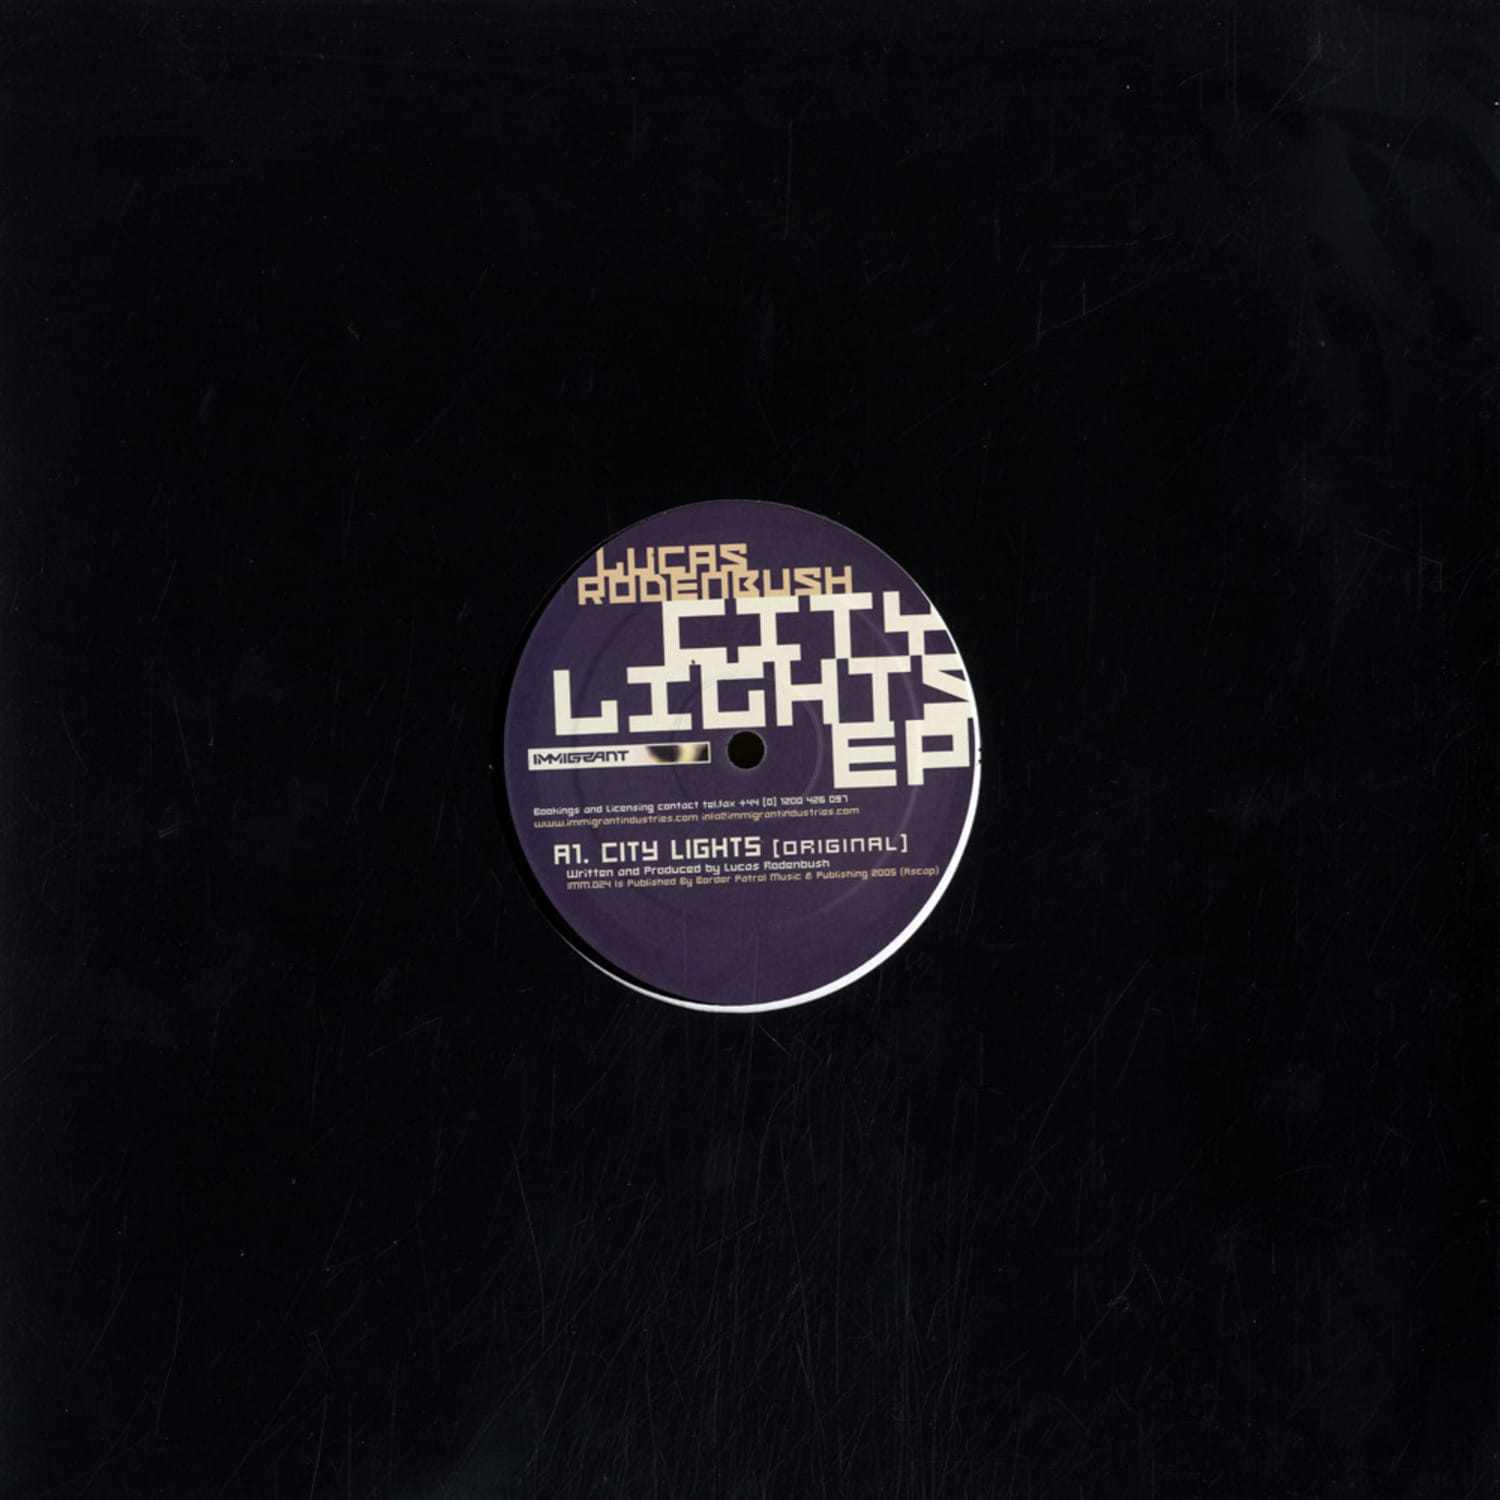 Lucas Rodenbush - CITY LIGHTS EP